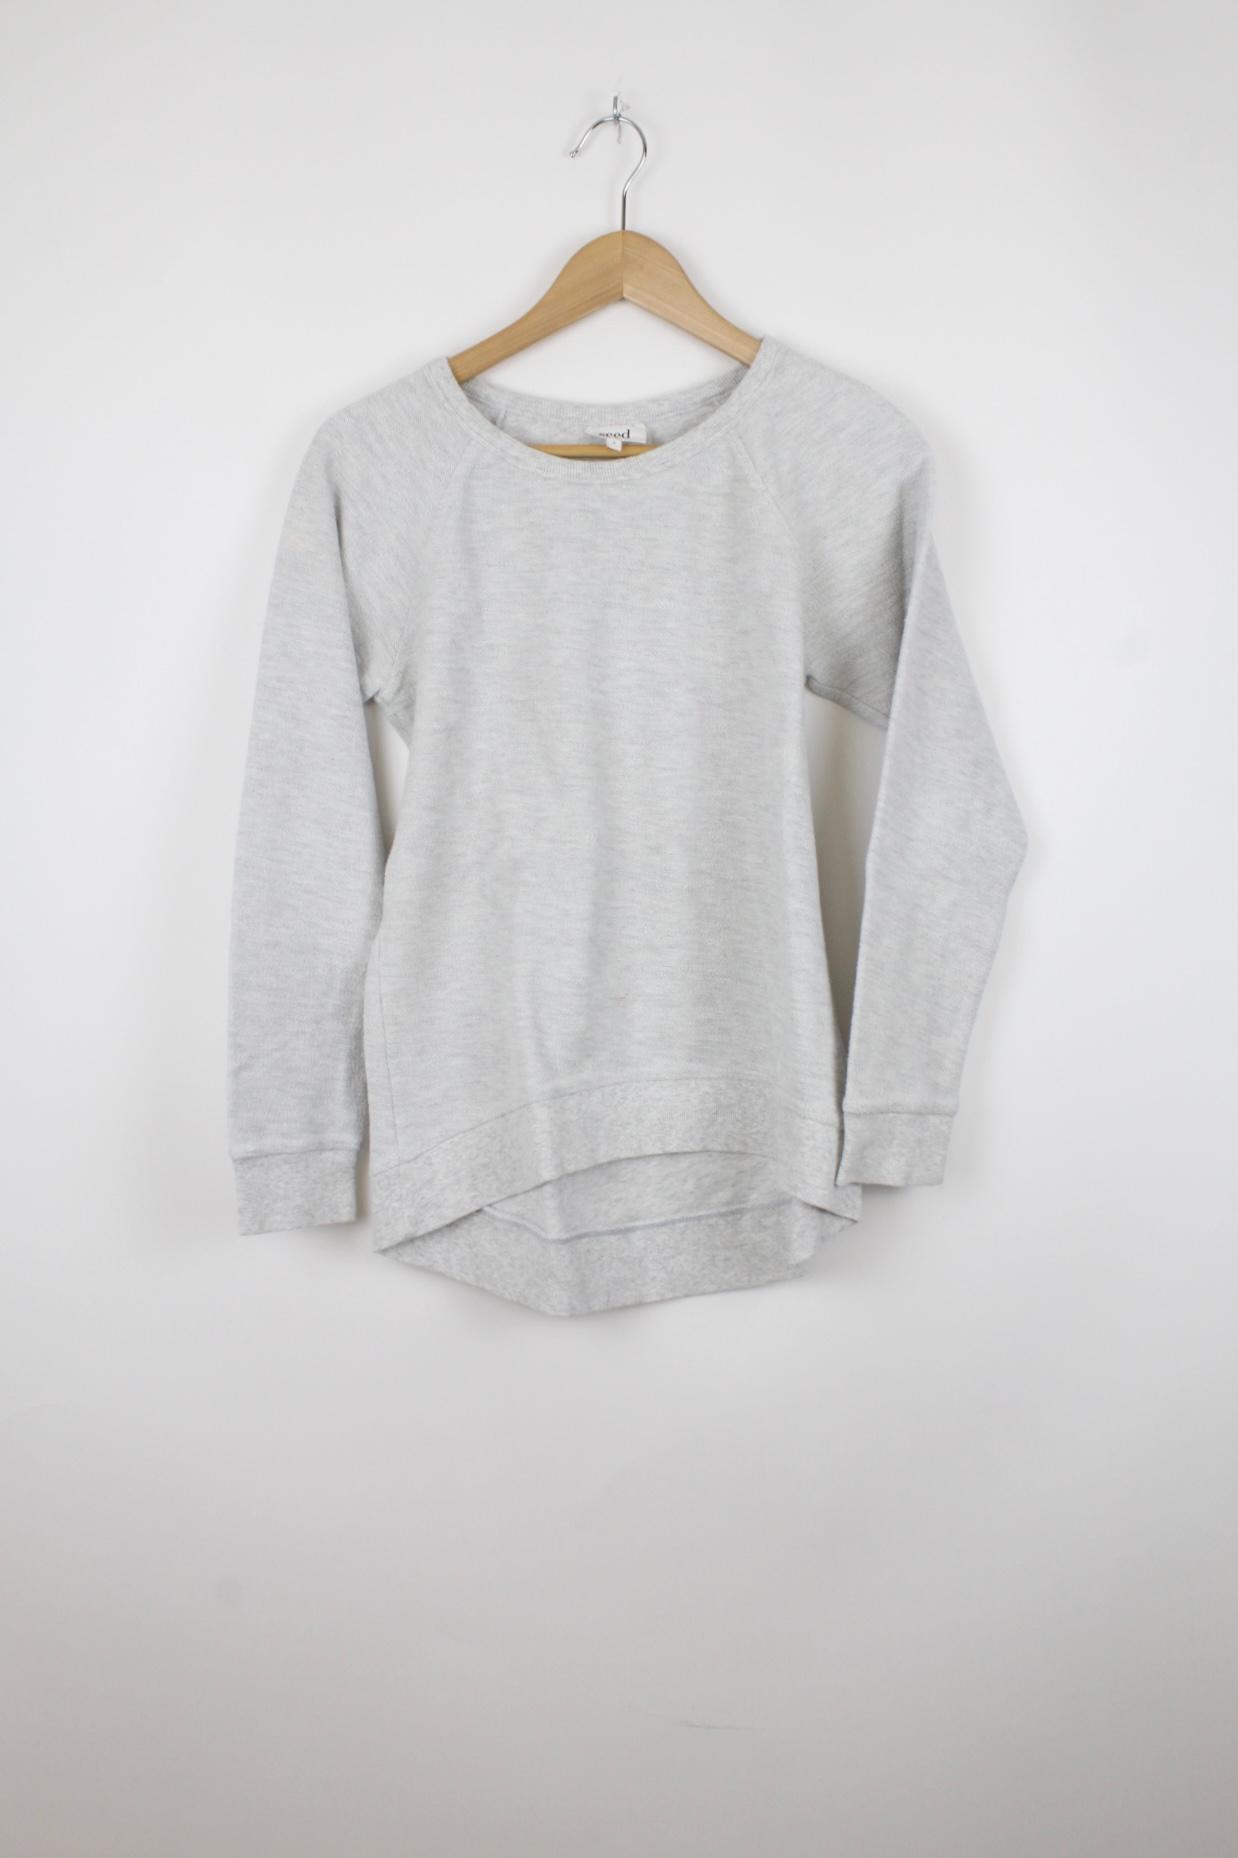 Basic Sweater - S